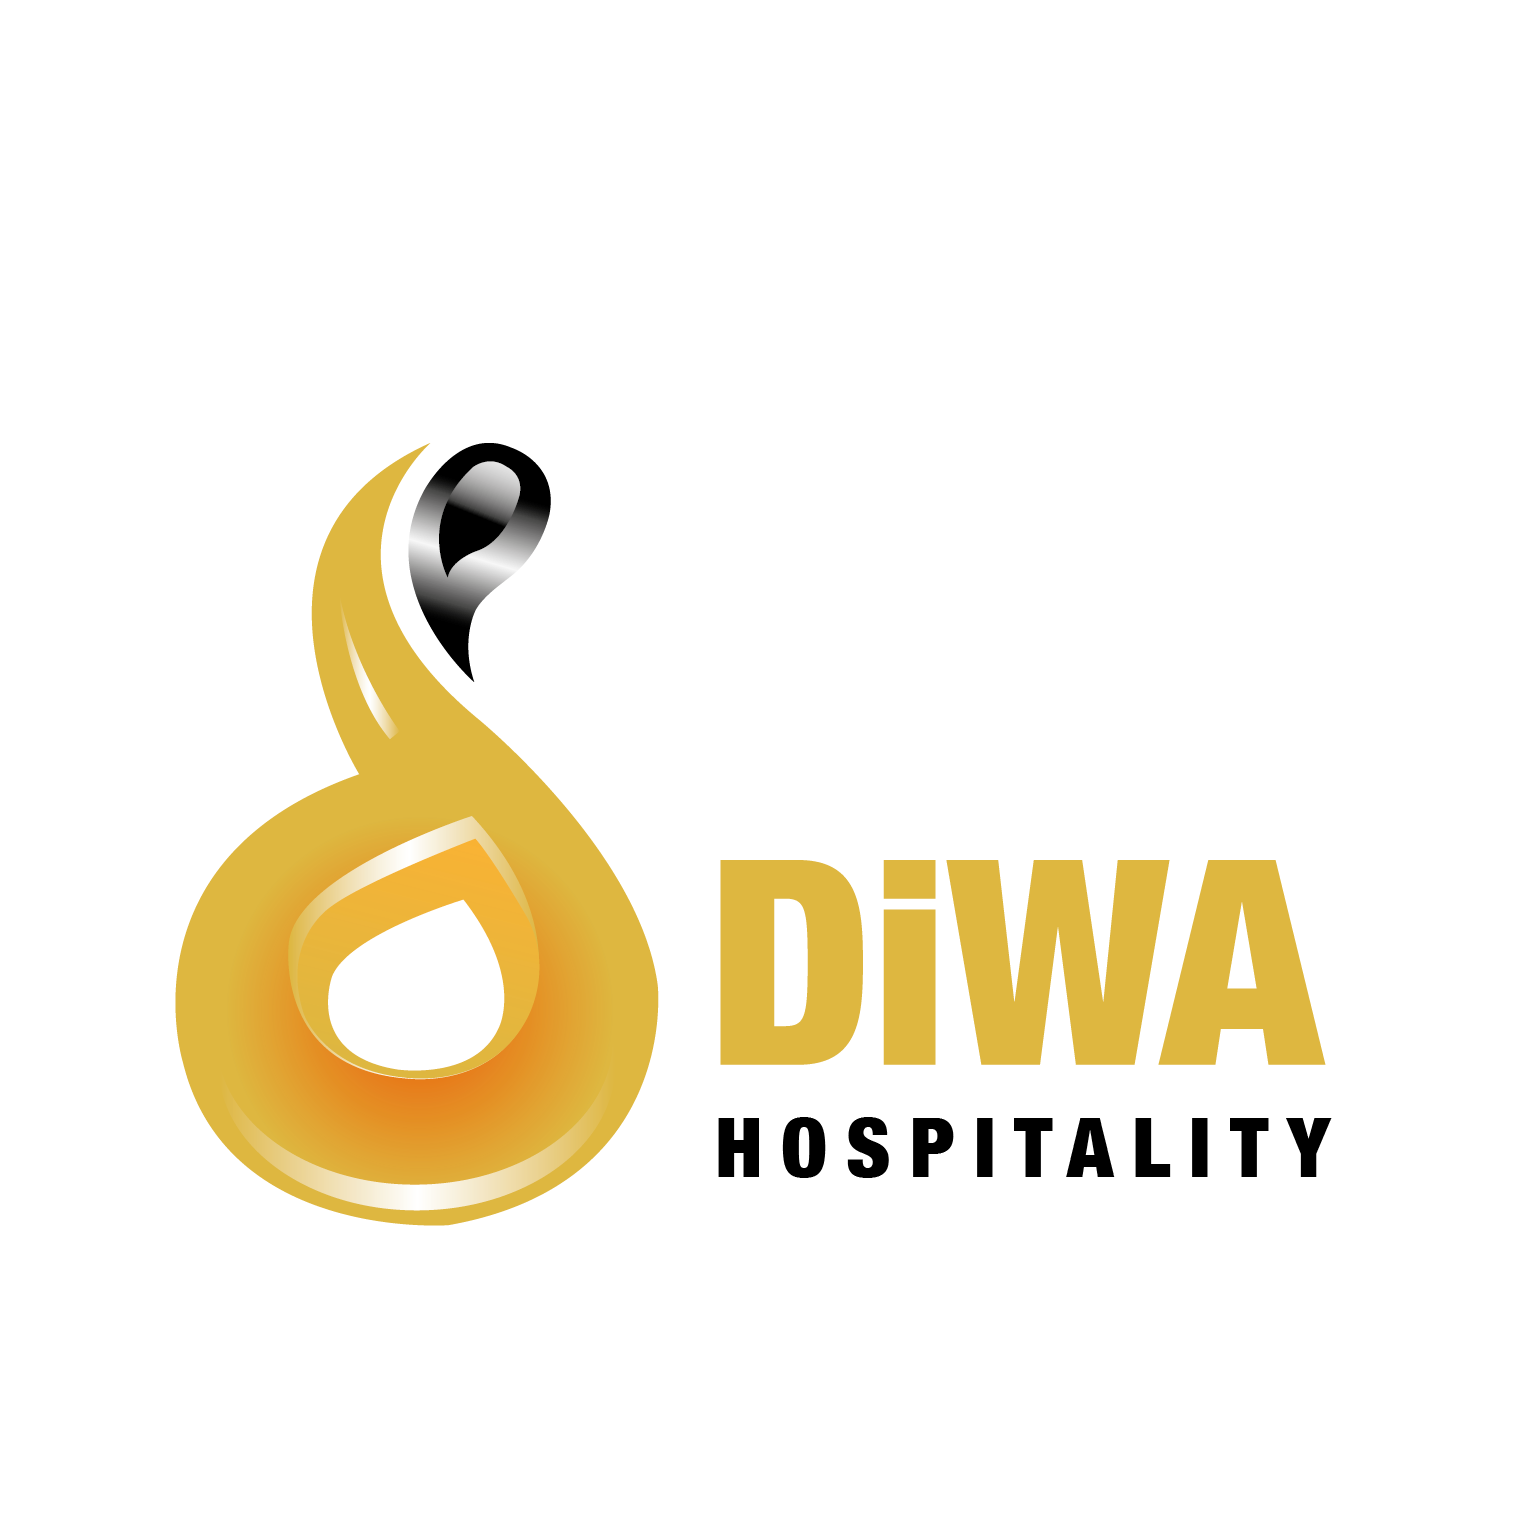 Diwa Hospitality logo